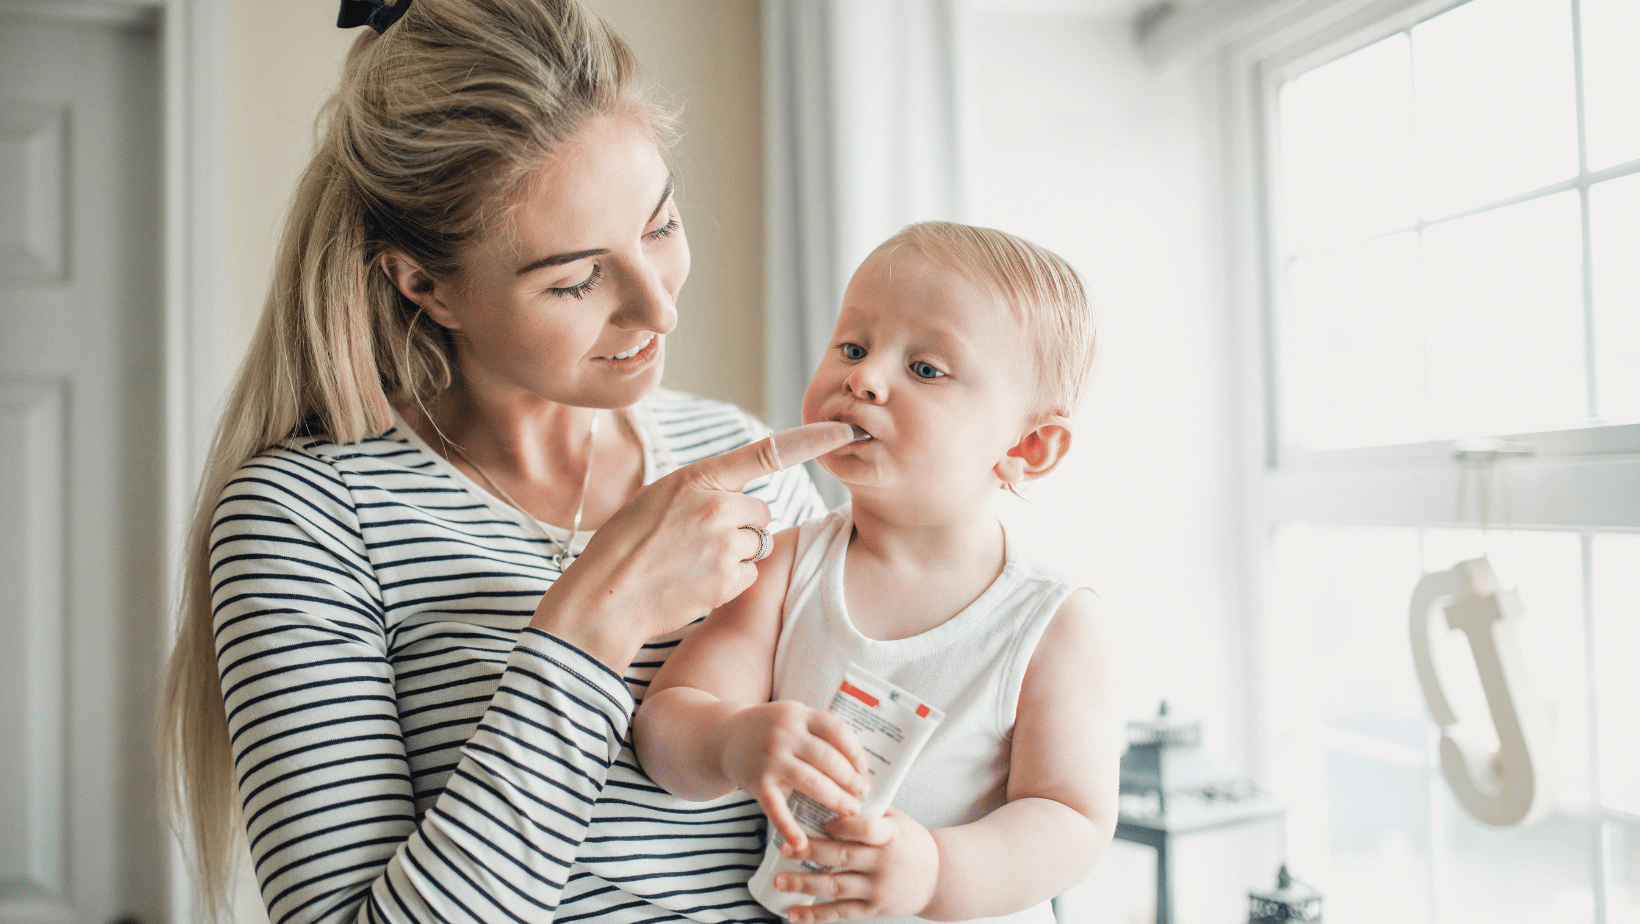 Mom applies teething gel to child's gums